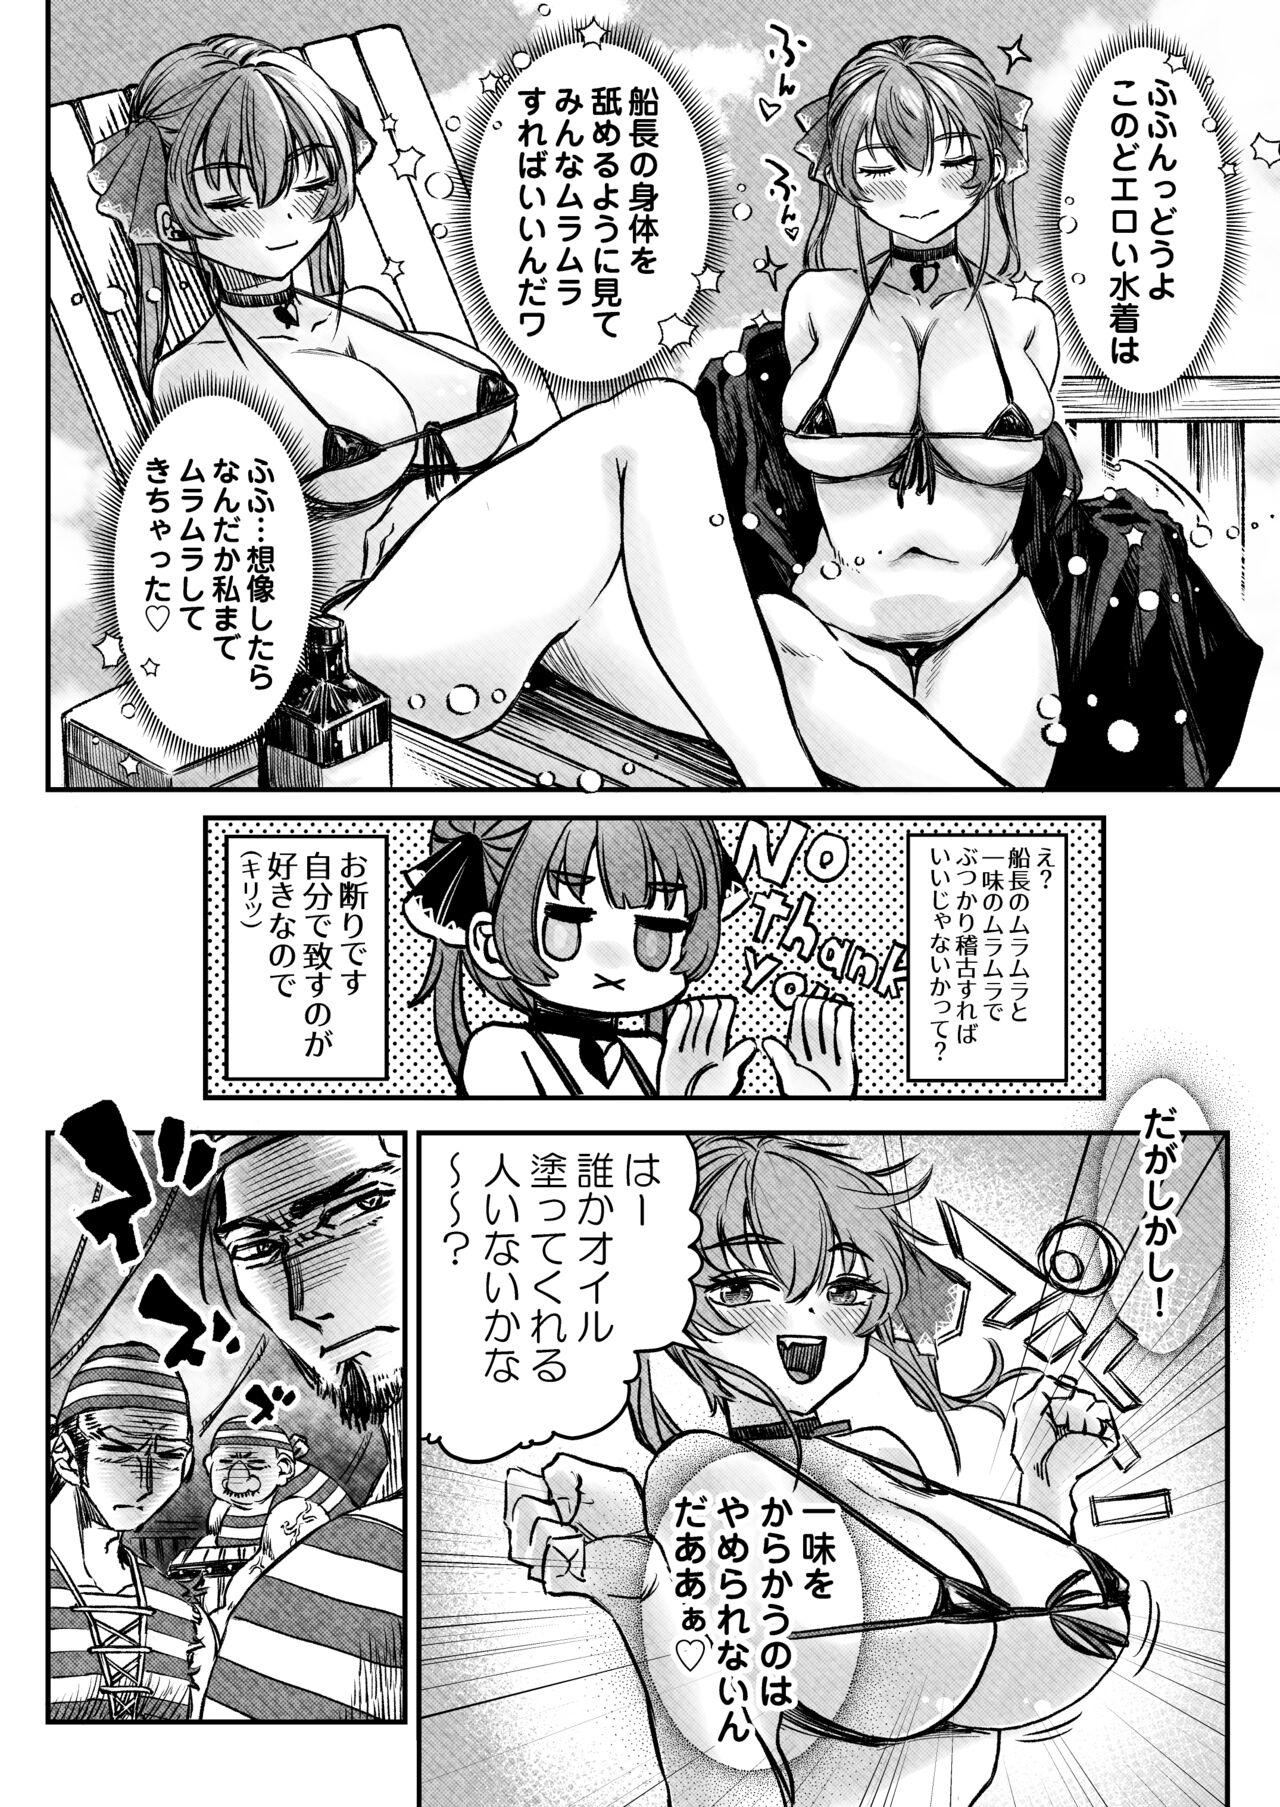 Panties Watashi ga Takarabako o Akete ii no ka ne? - Hololive Pussy Lick - Page 3